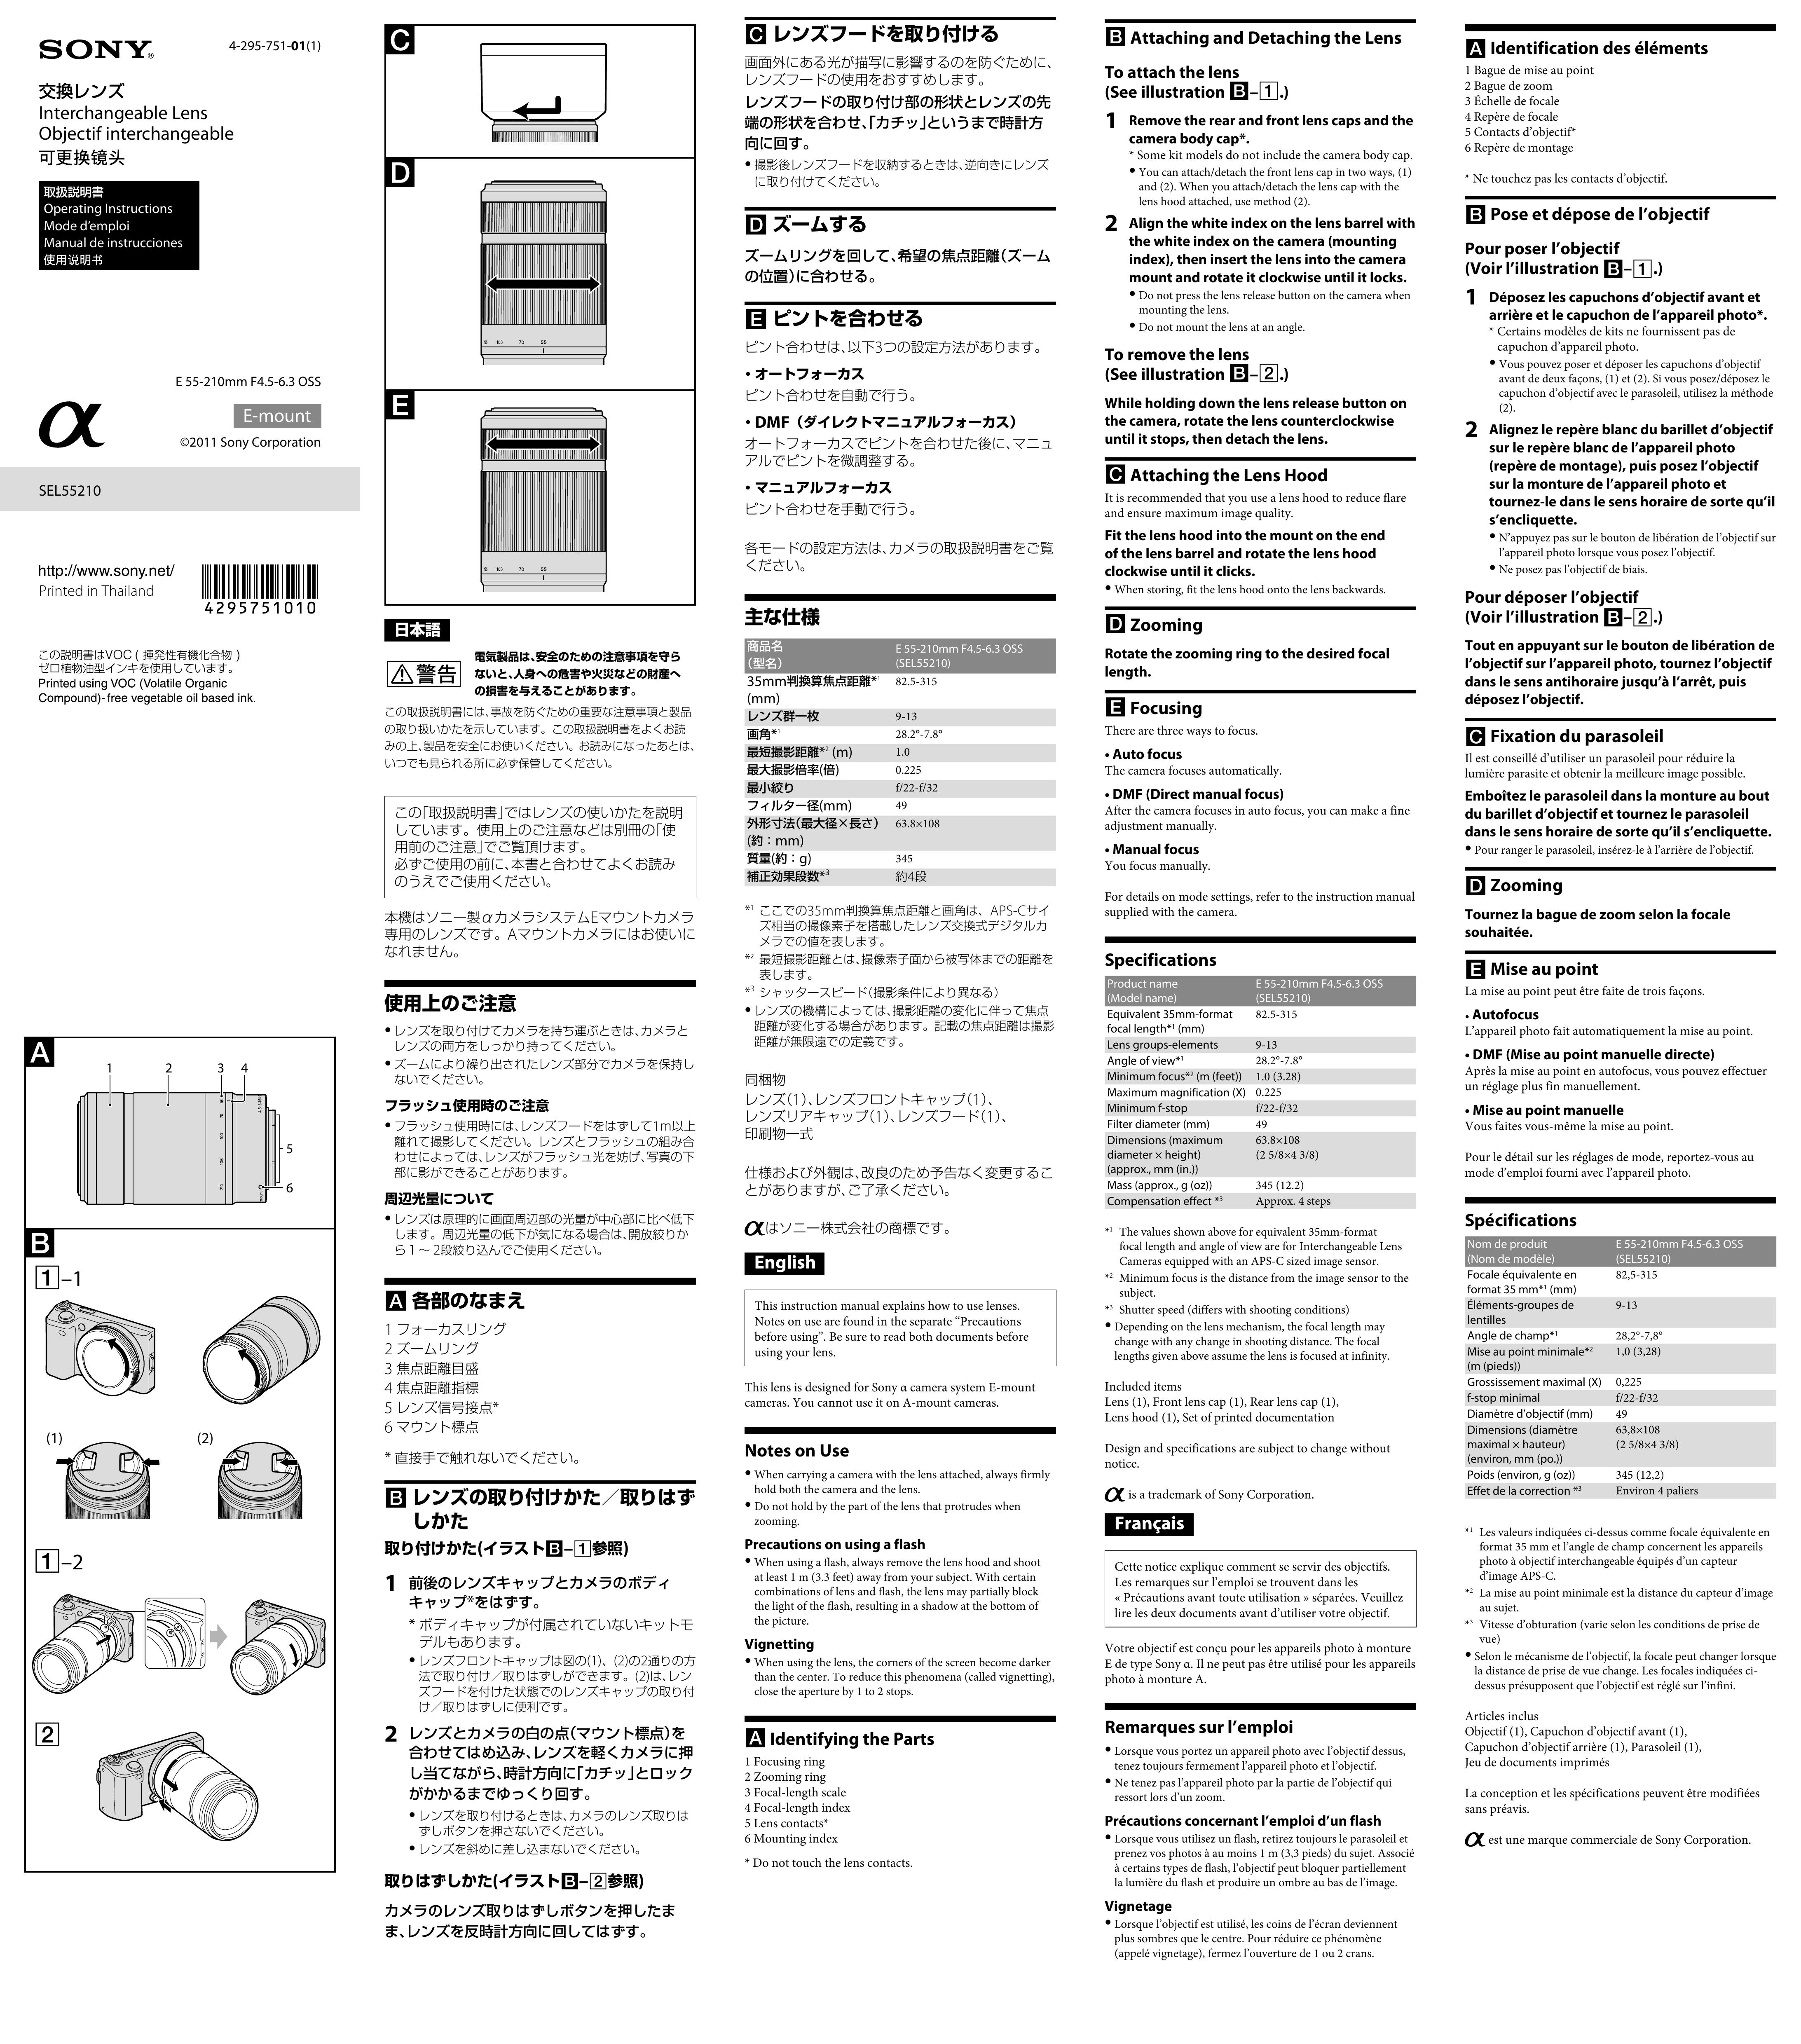 Sony E 55210mm F4563 OSS Camera Lens User Manual